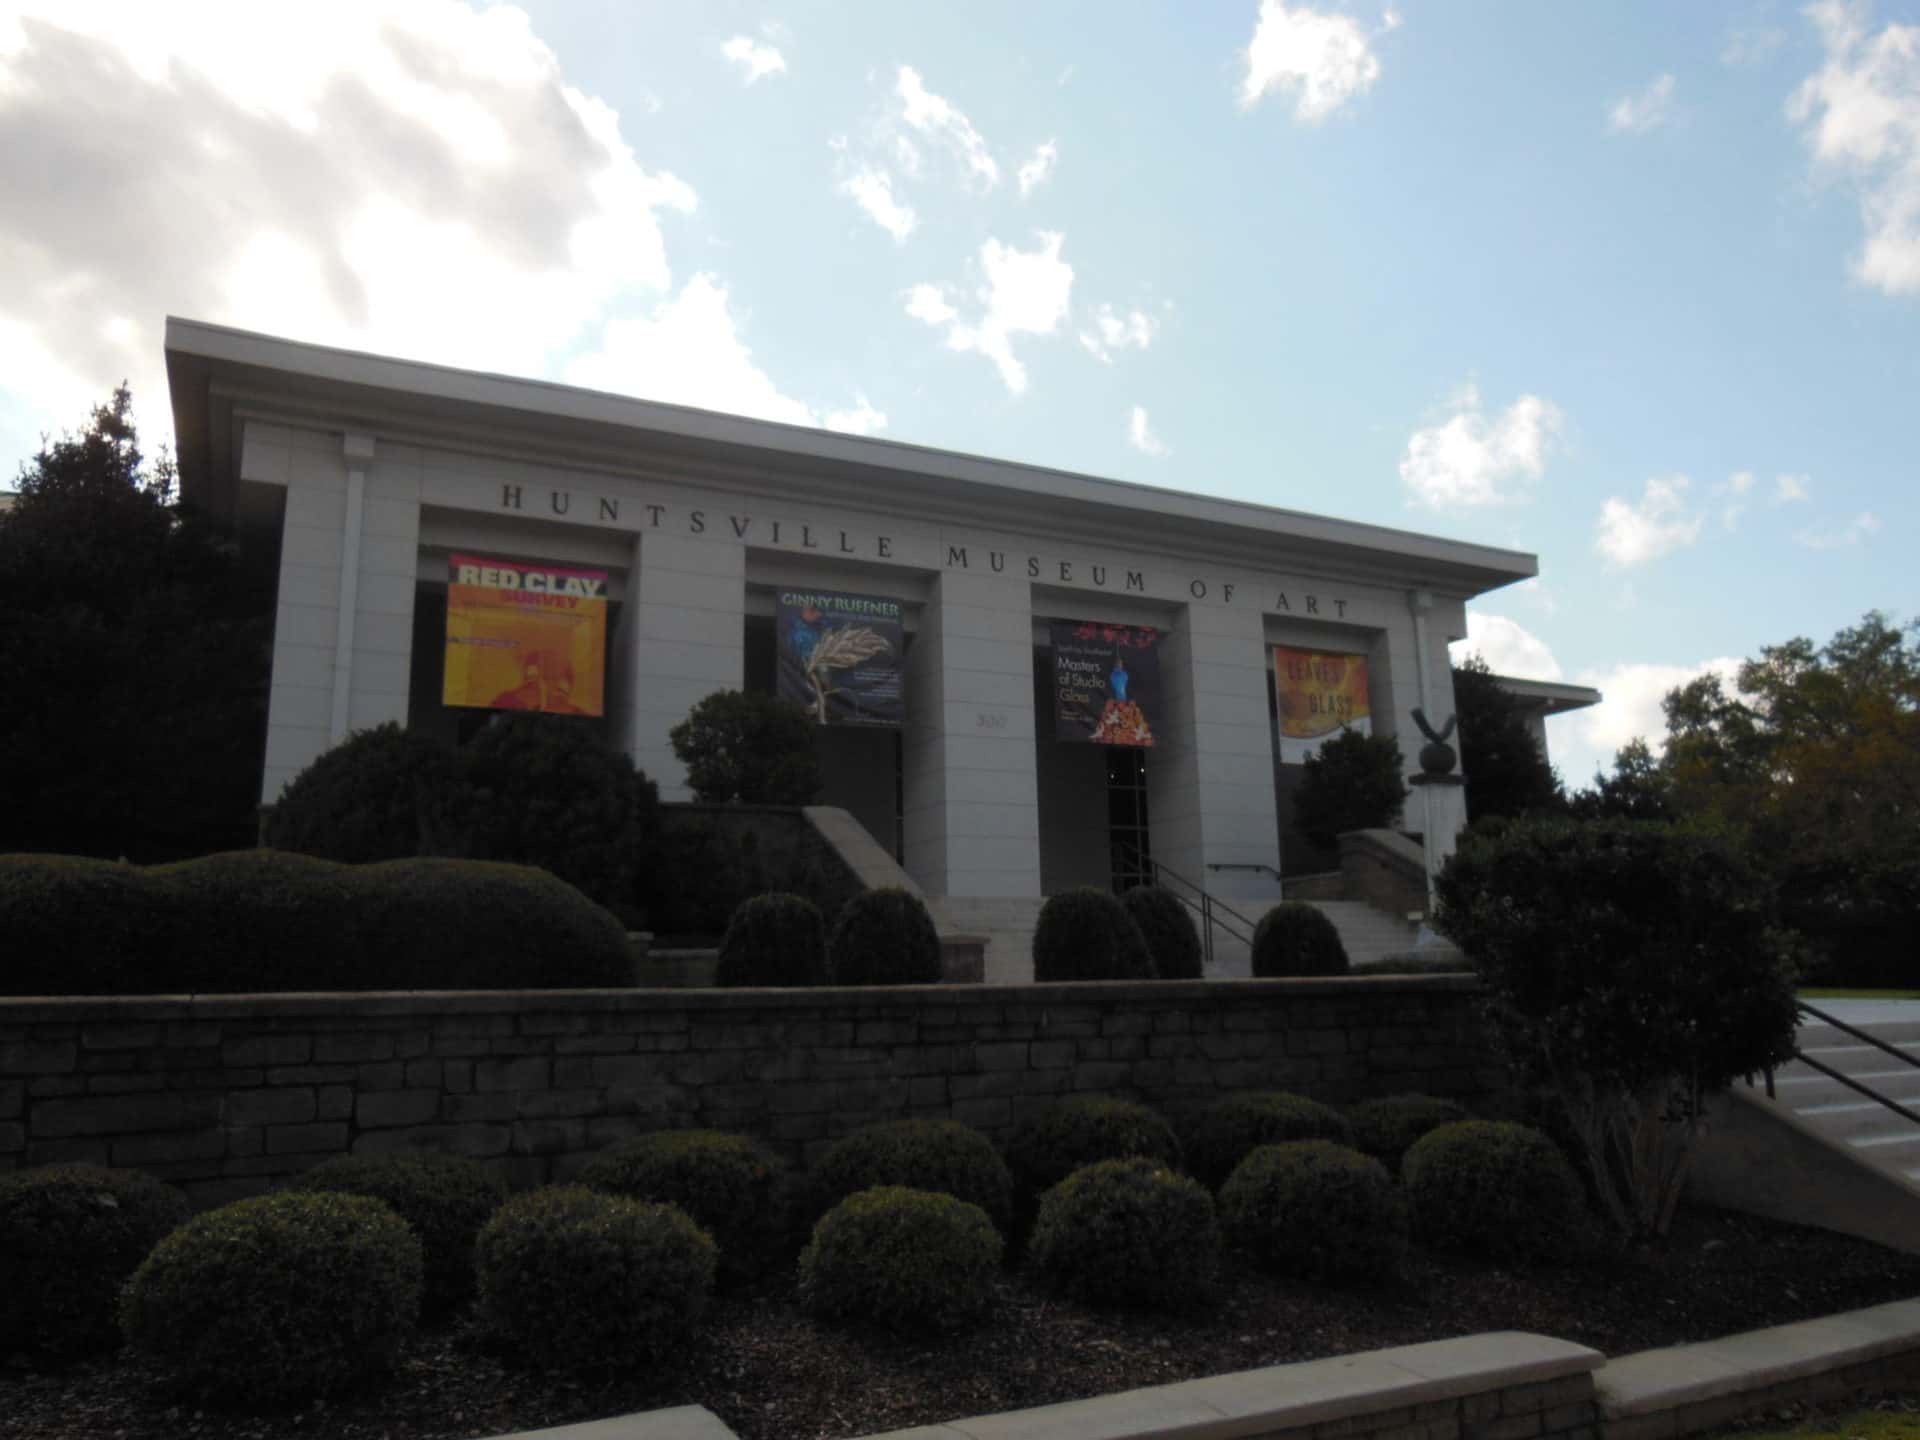 Huntsville Museum of Art - Side of Entrance